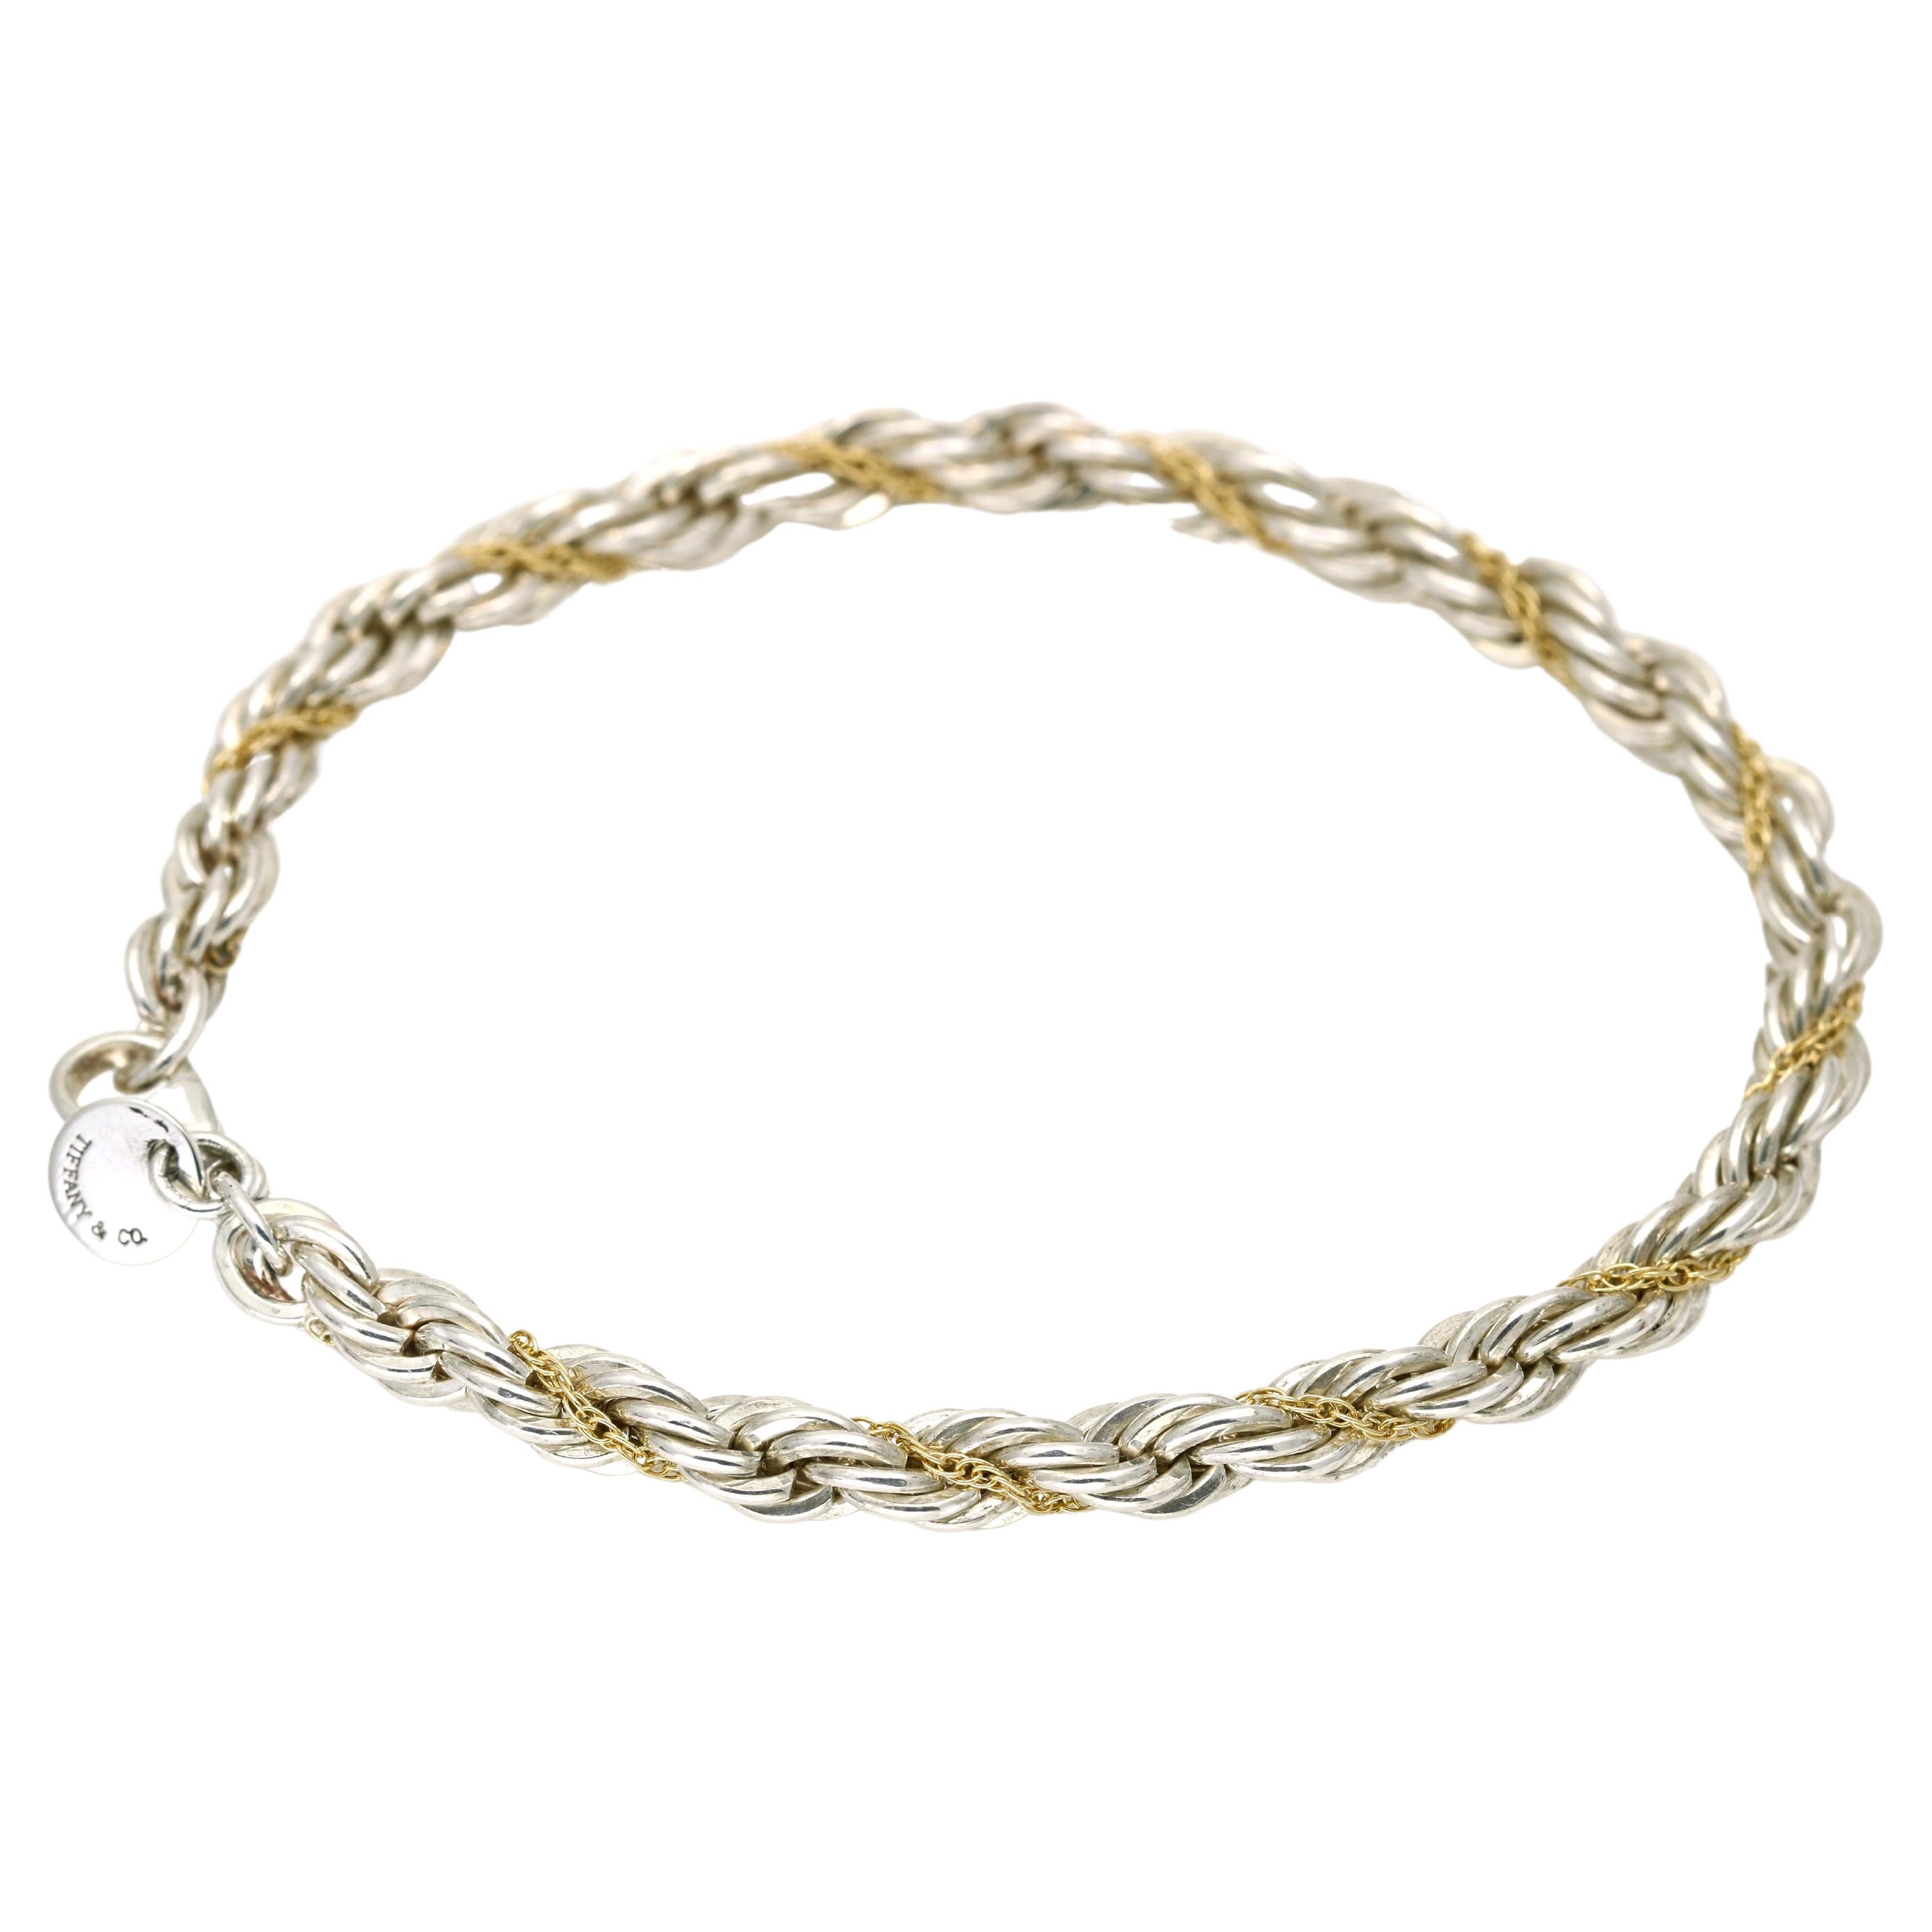 Tiffany & Co. - Platinum & 18K Yellow Gold Gemset And Diamond Charm Bracelet